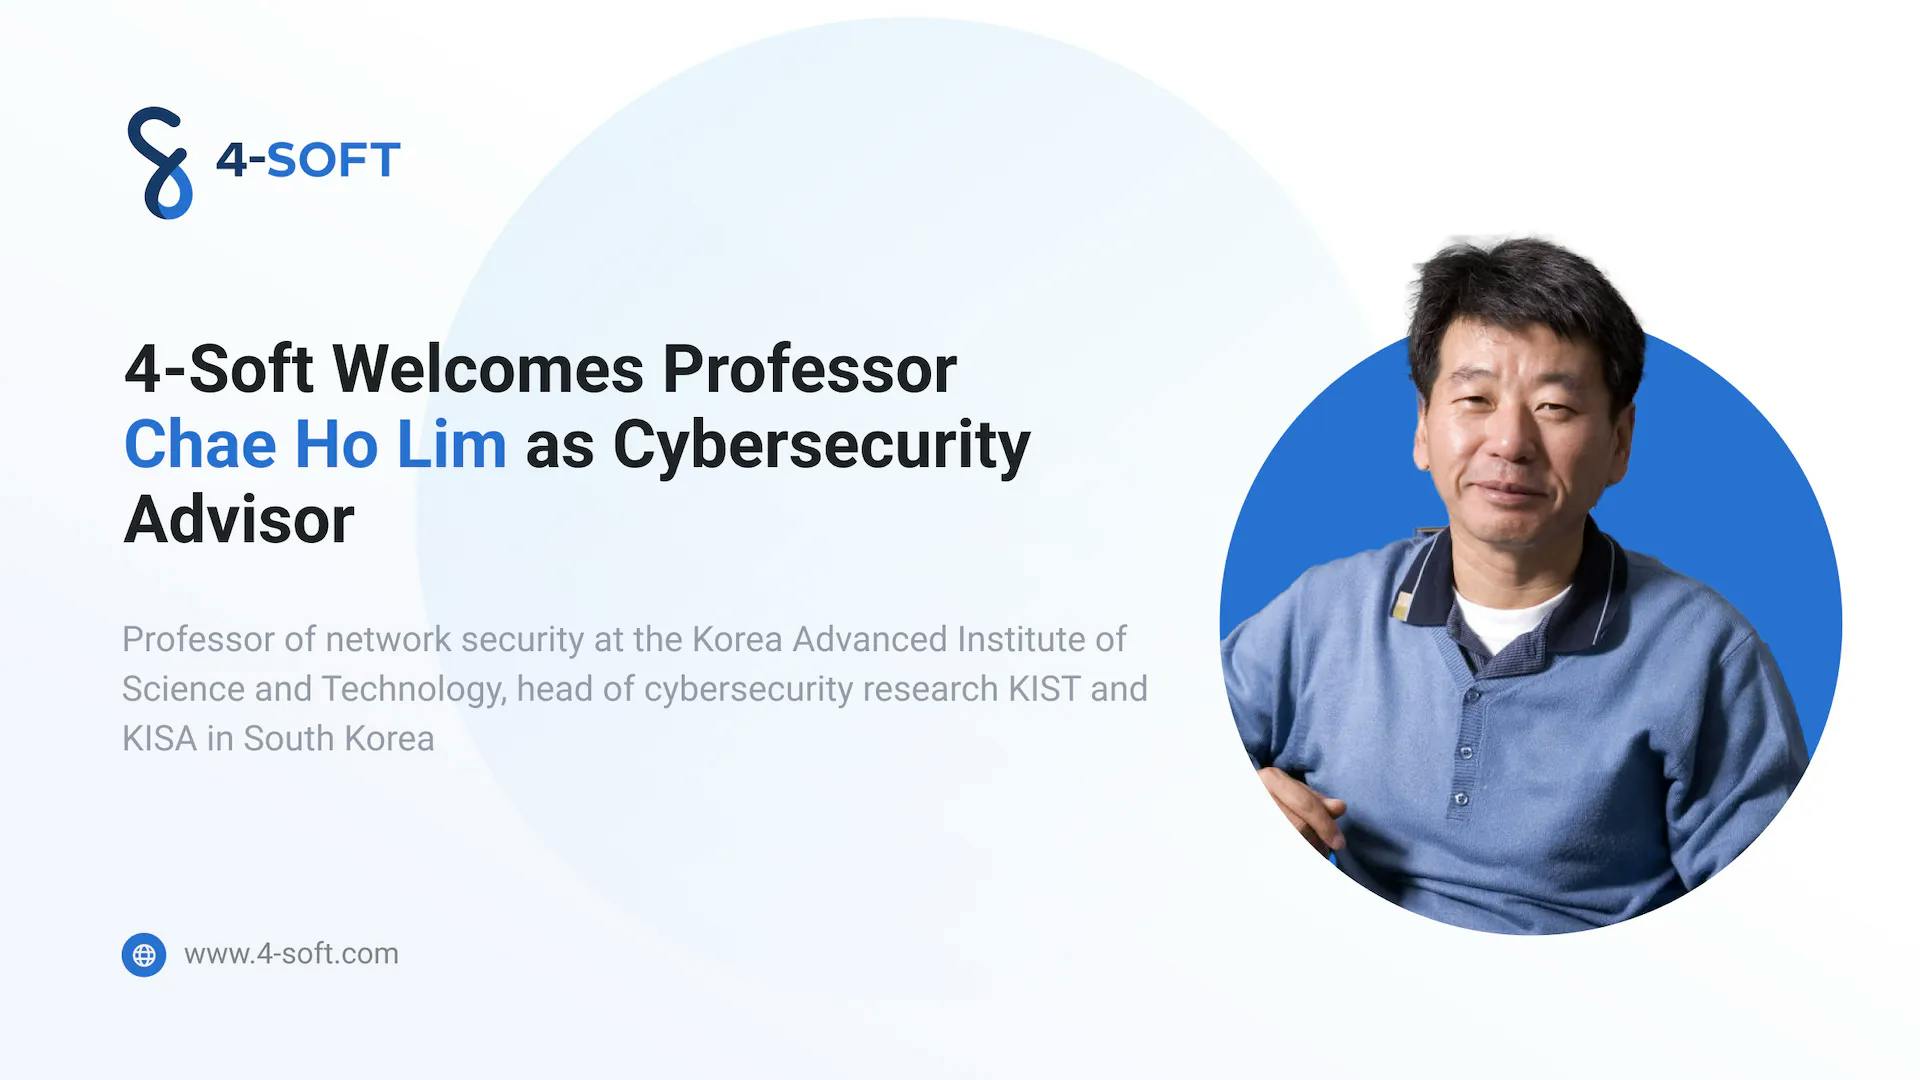 4-Soft Welcomes Professor Chae Ho Lim as Cybersecurity Advisor